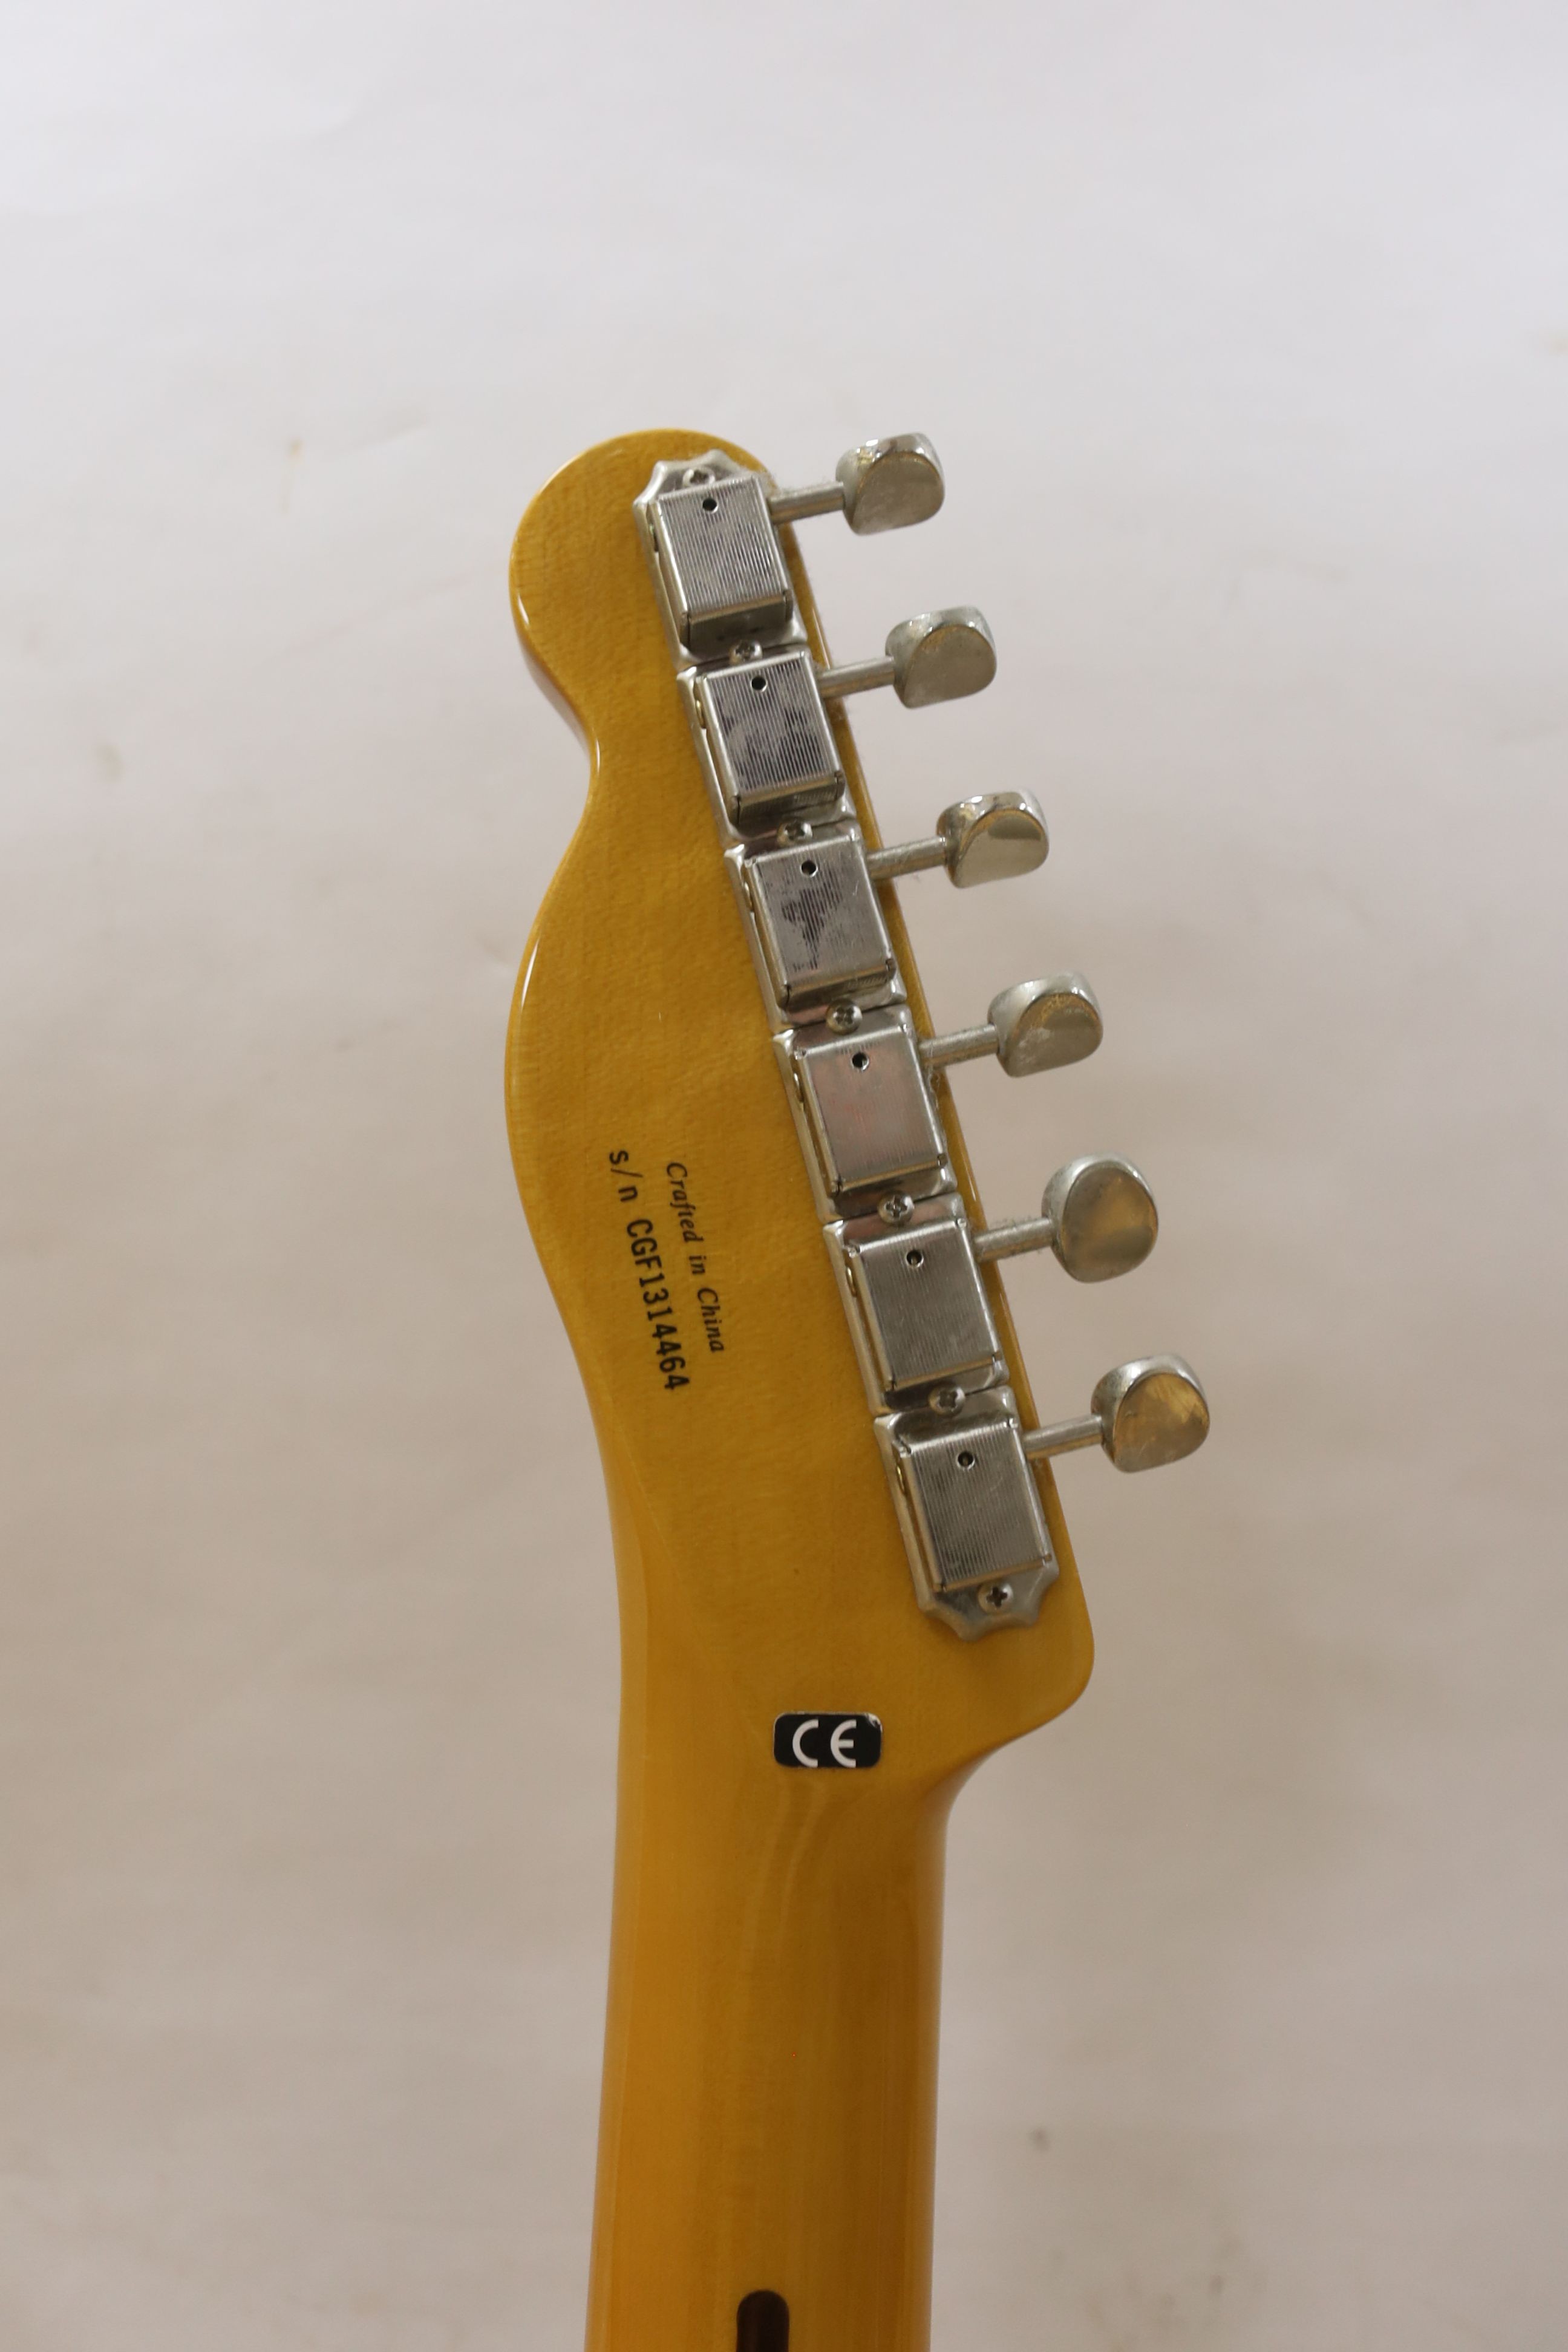 A Fender Telecaster guitar. Serial number CGF1314464 - Image 6 of 8